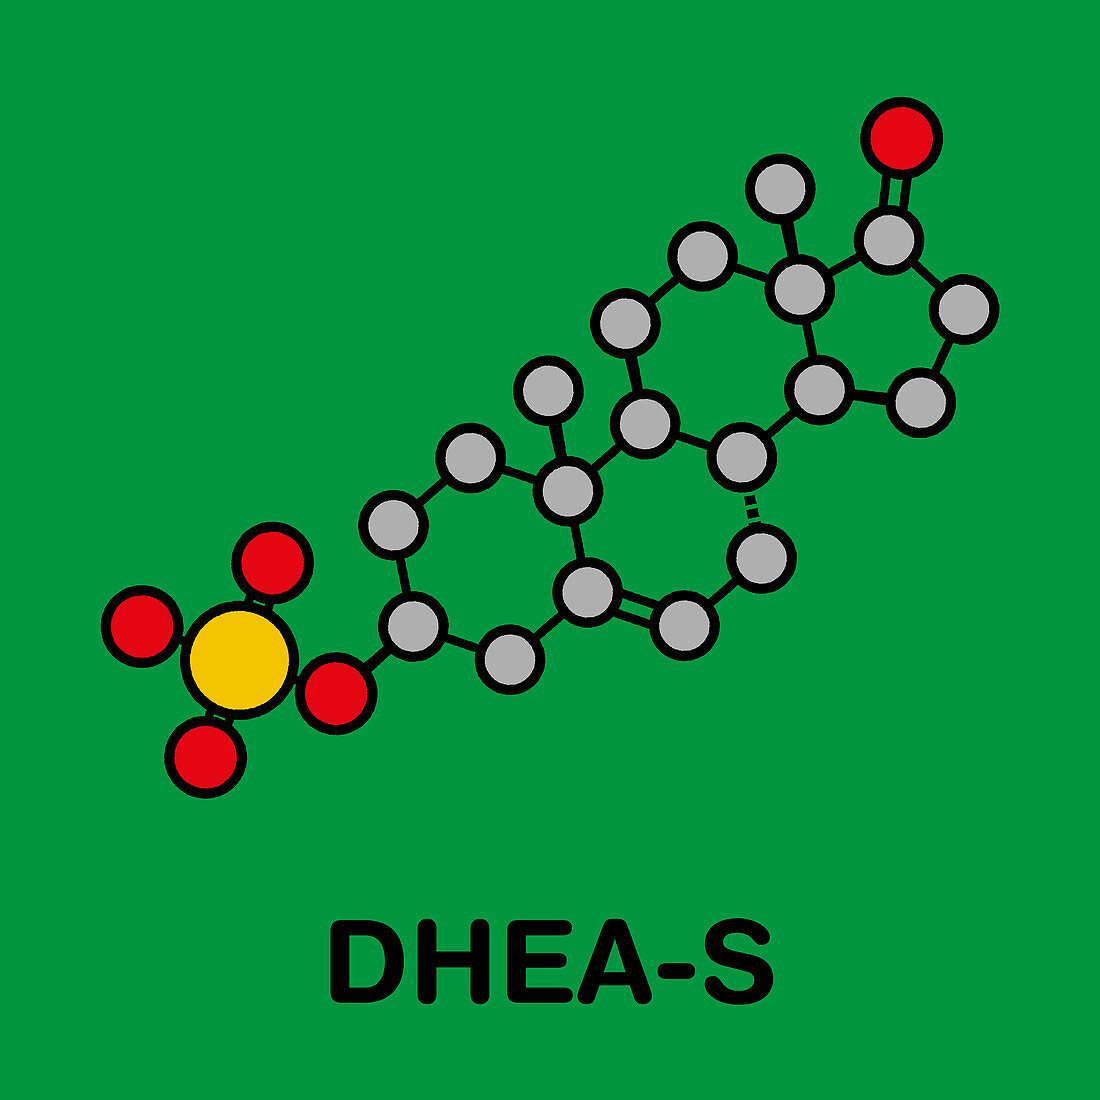 Dehydroepiandrosterone sulfate hormone molecule, illustratio